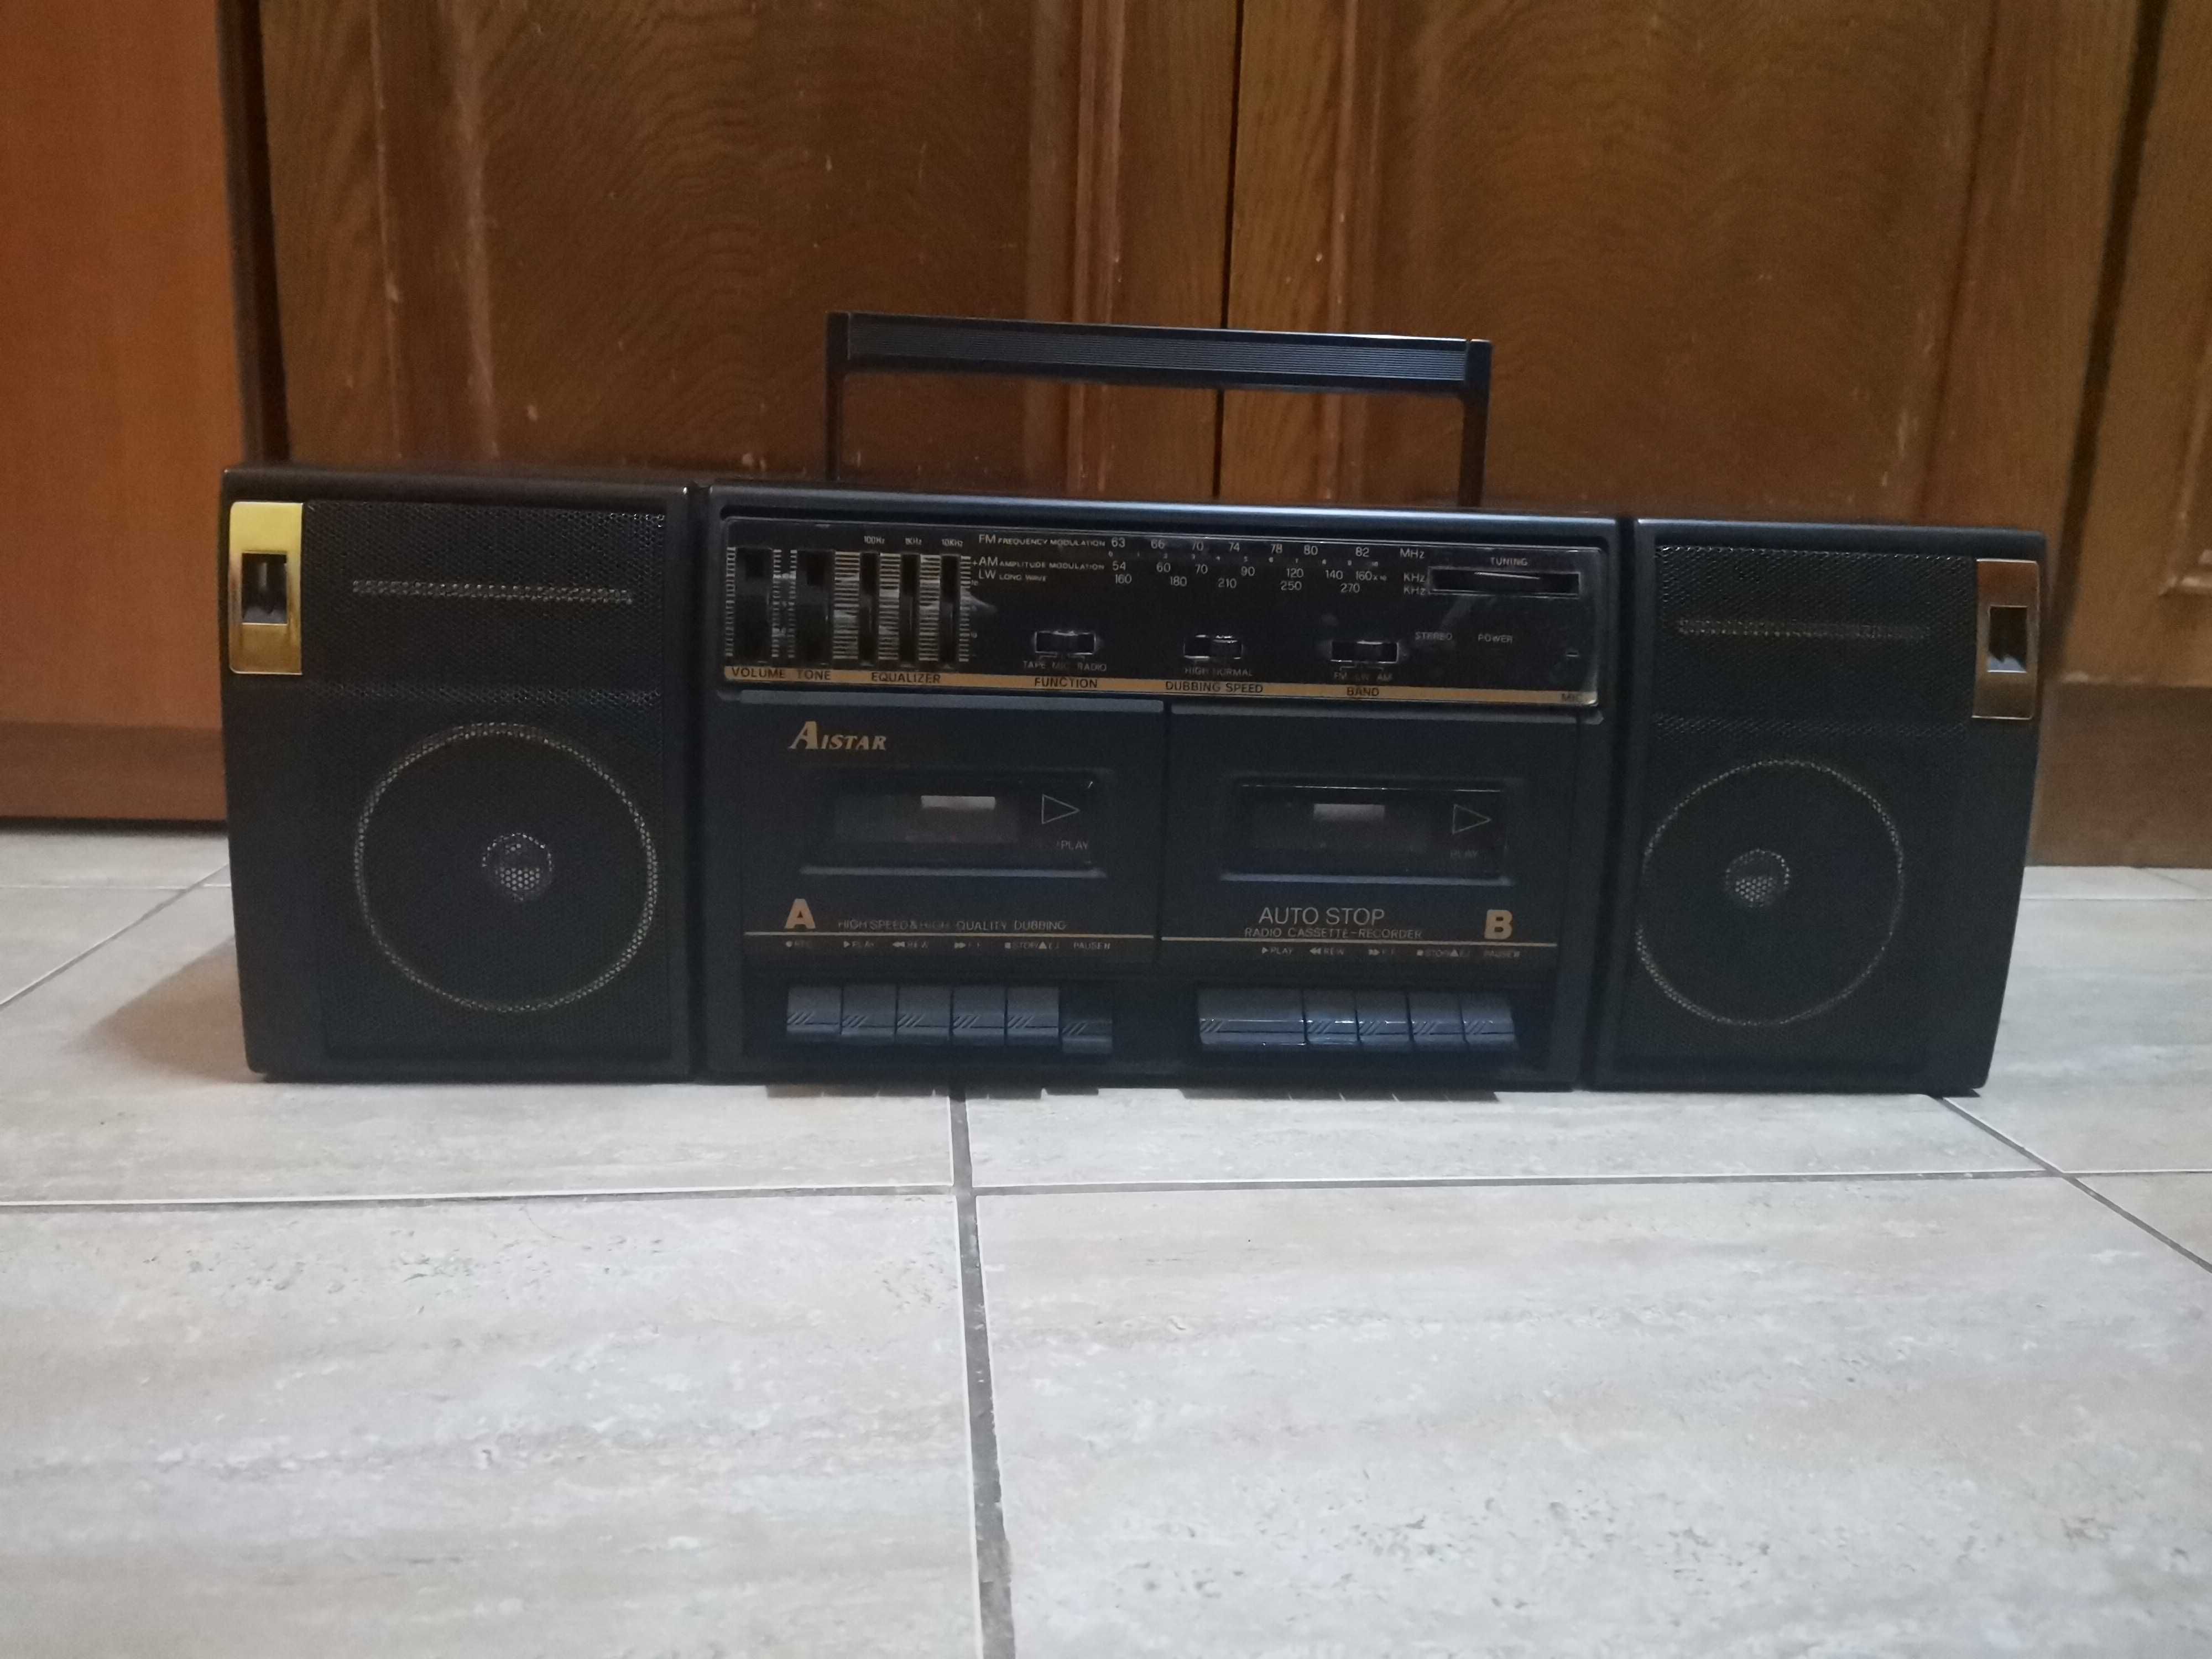 Radio casetofon Aistar cassette